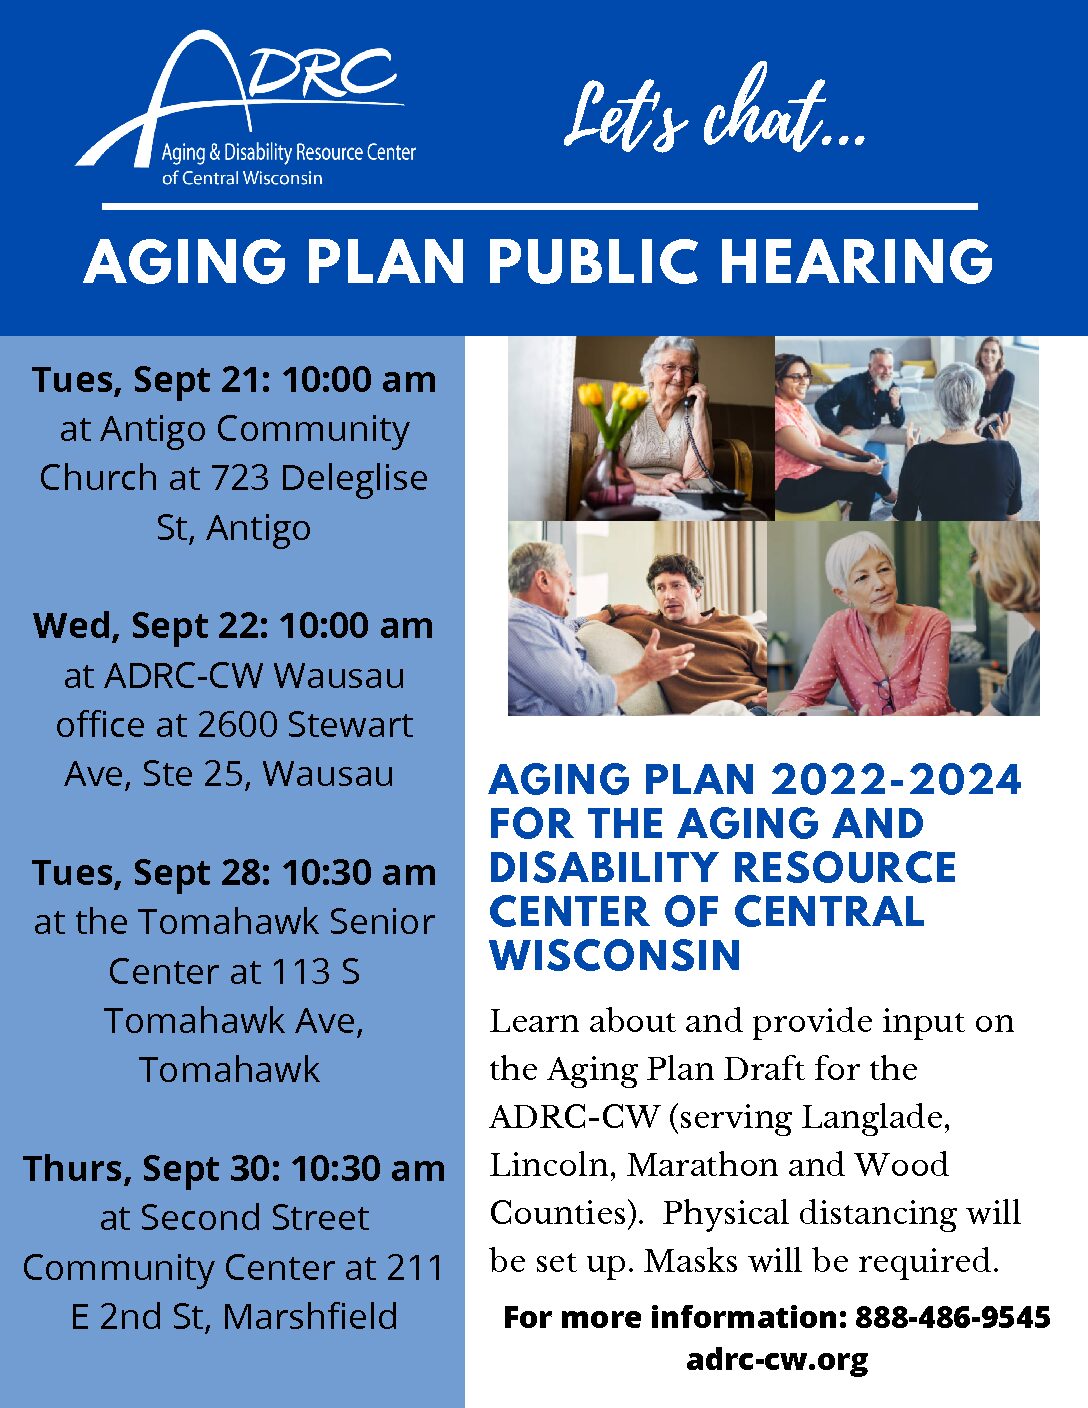 ADRC-CW 2021 Aging Plan Public Hearing